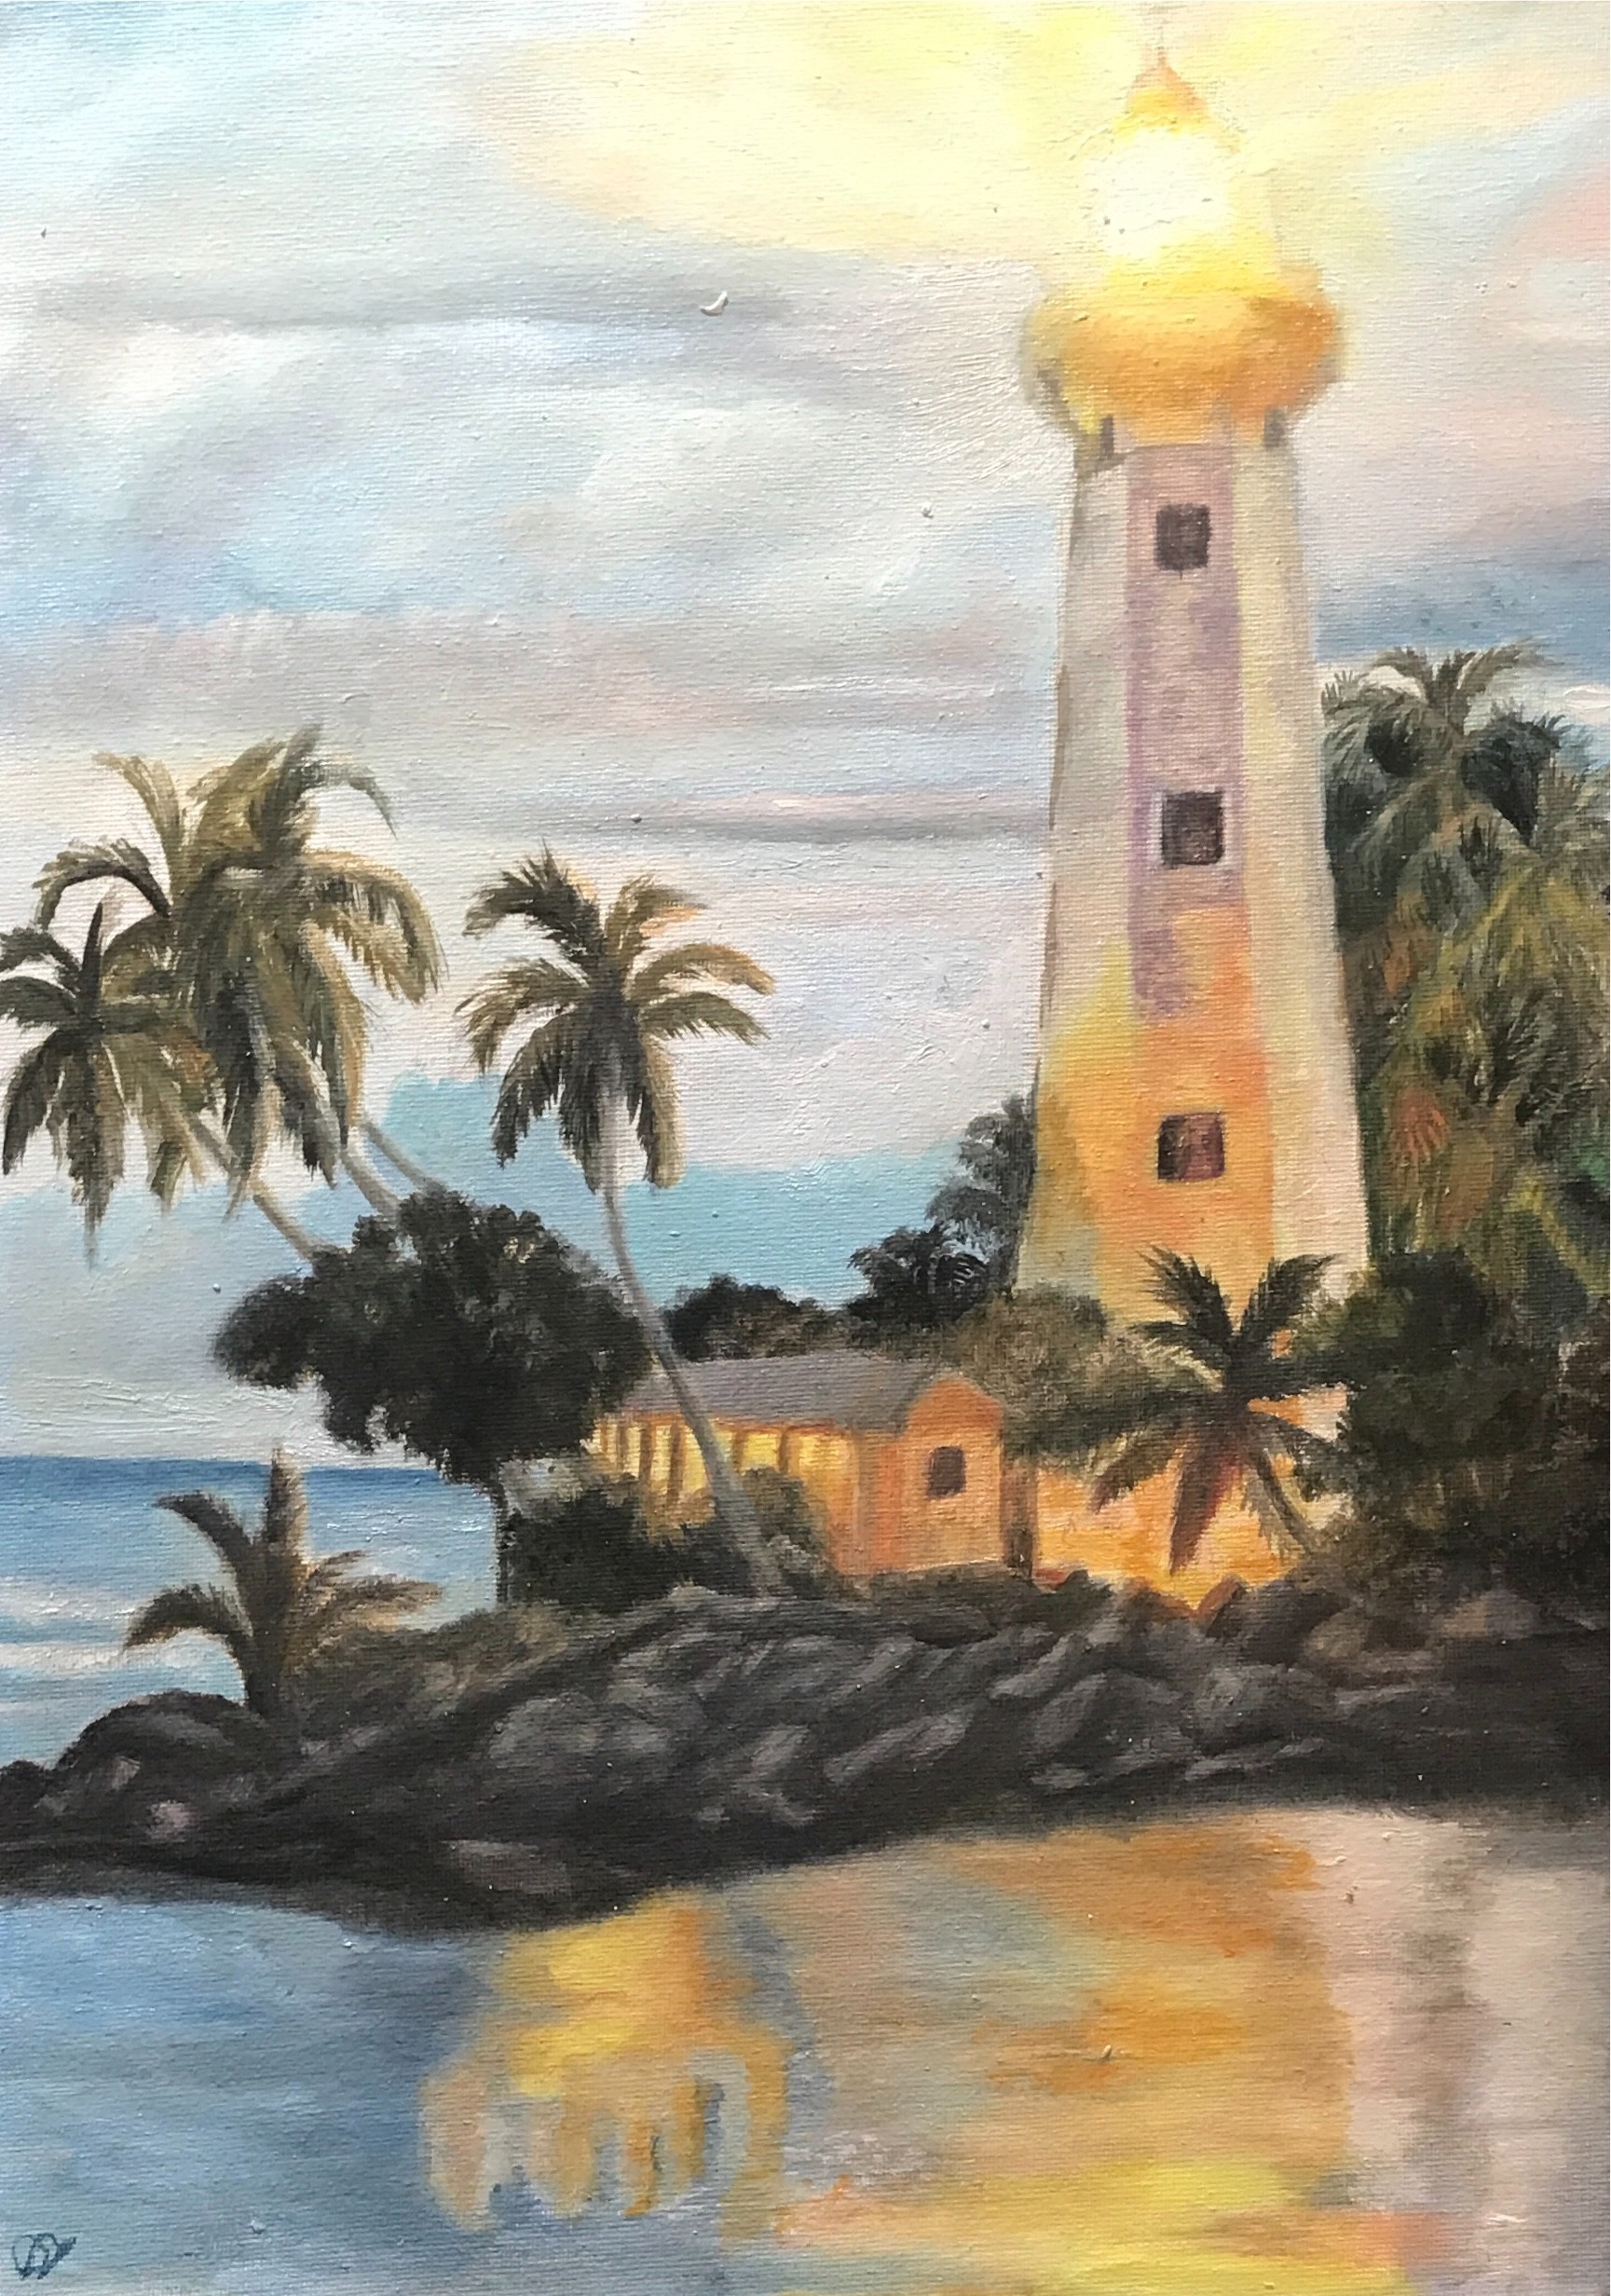 The Lighthouse by Dhammani Nakandalage